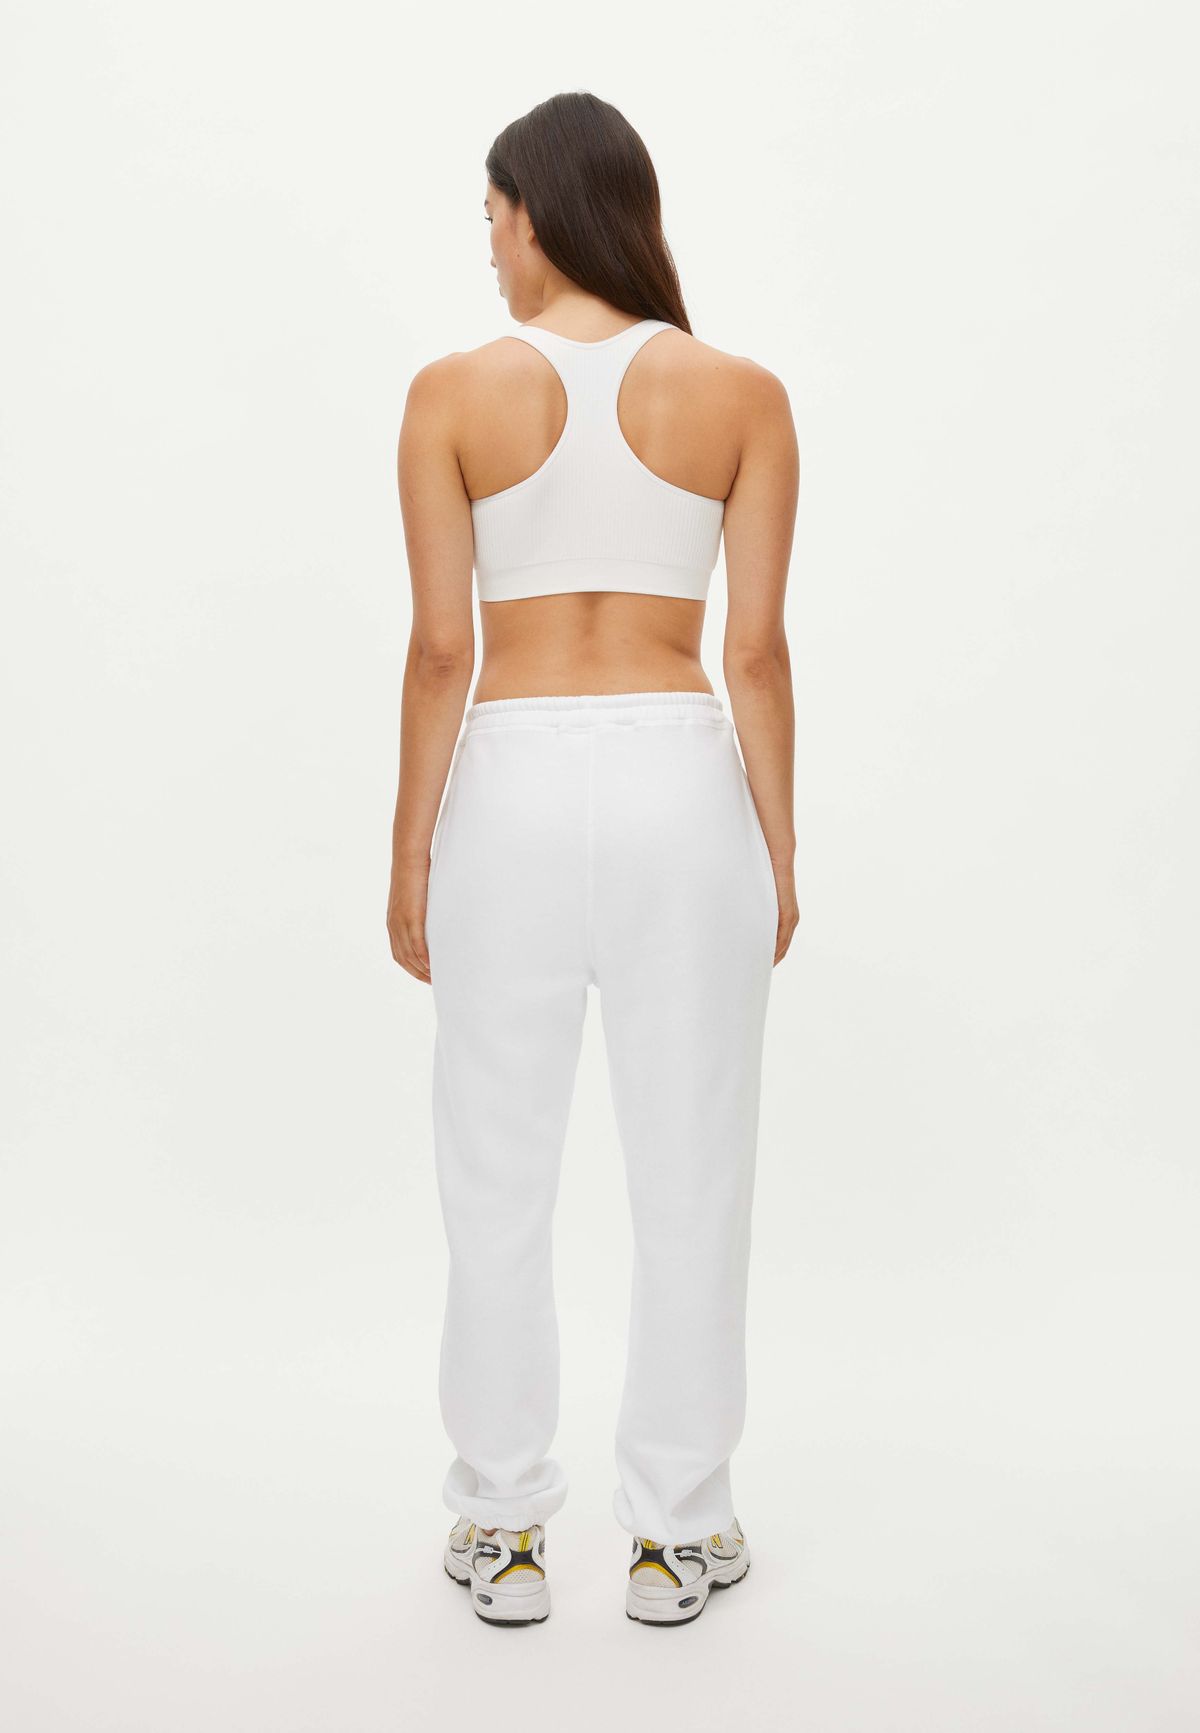 Iconic Sweatpants, White